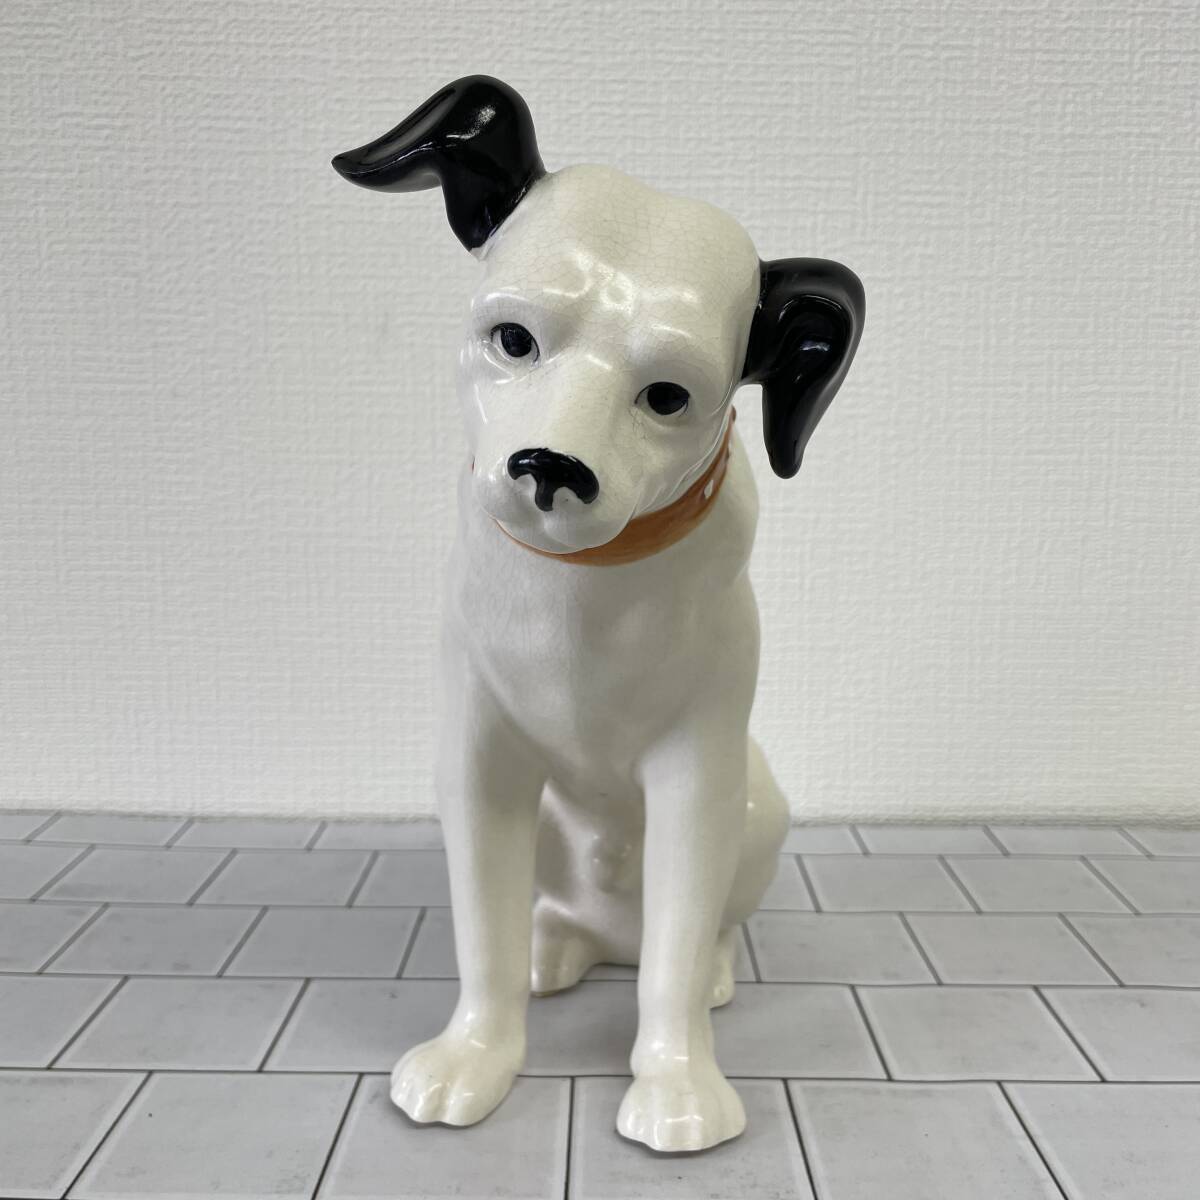 E003-M25-89 Victor ビクター ビクター犬 犬 ニッパー君 高さ 約24cm 陶器 置物 飾り物 アンティーク レトロ コレクションの画像1